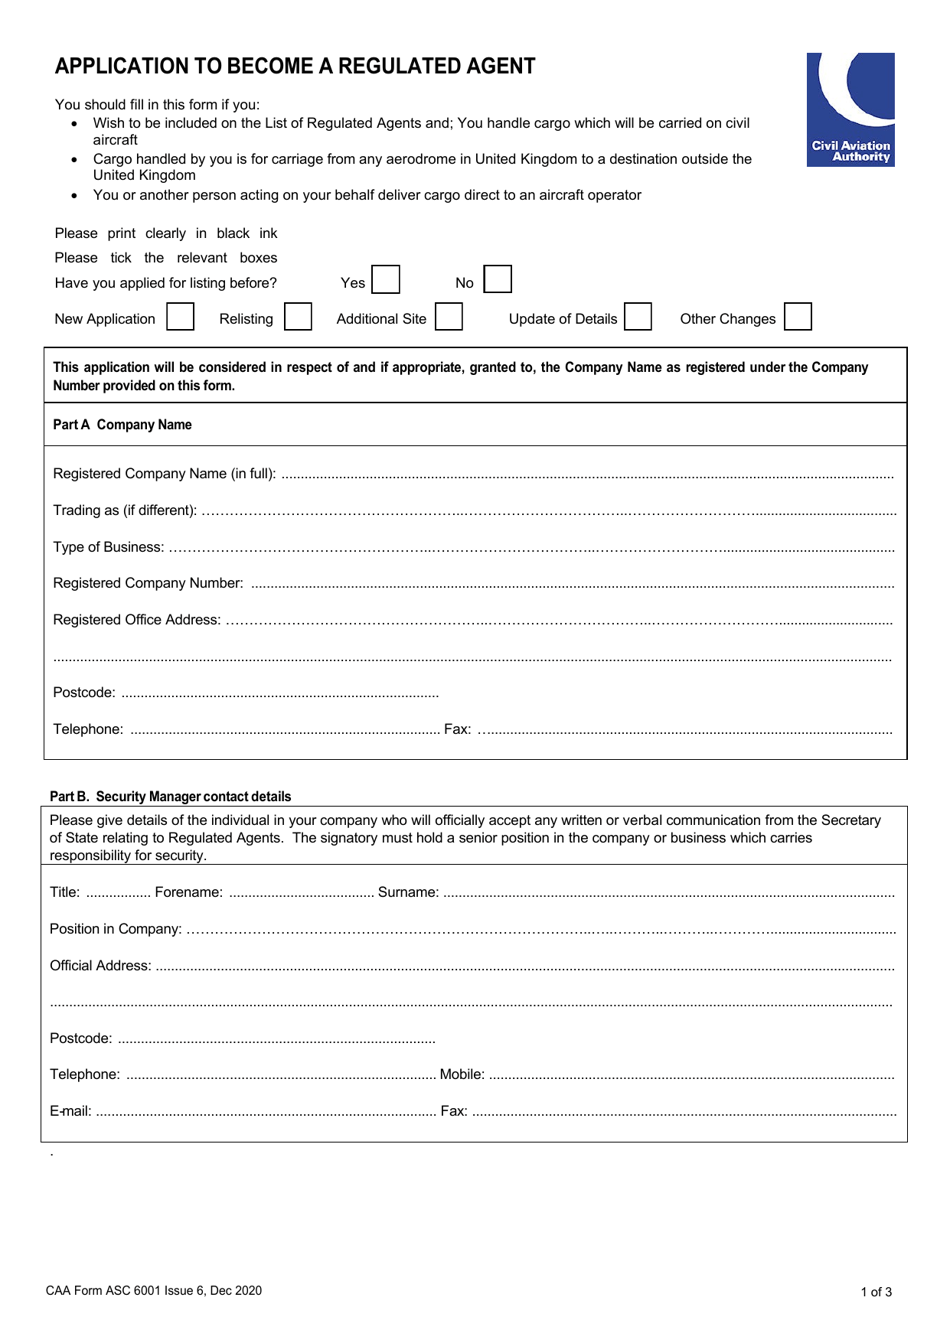 CAA Form ASC6001 Application to Become a Regulated Agent - United Kingdom, Page 1